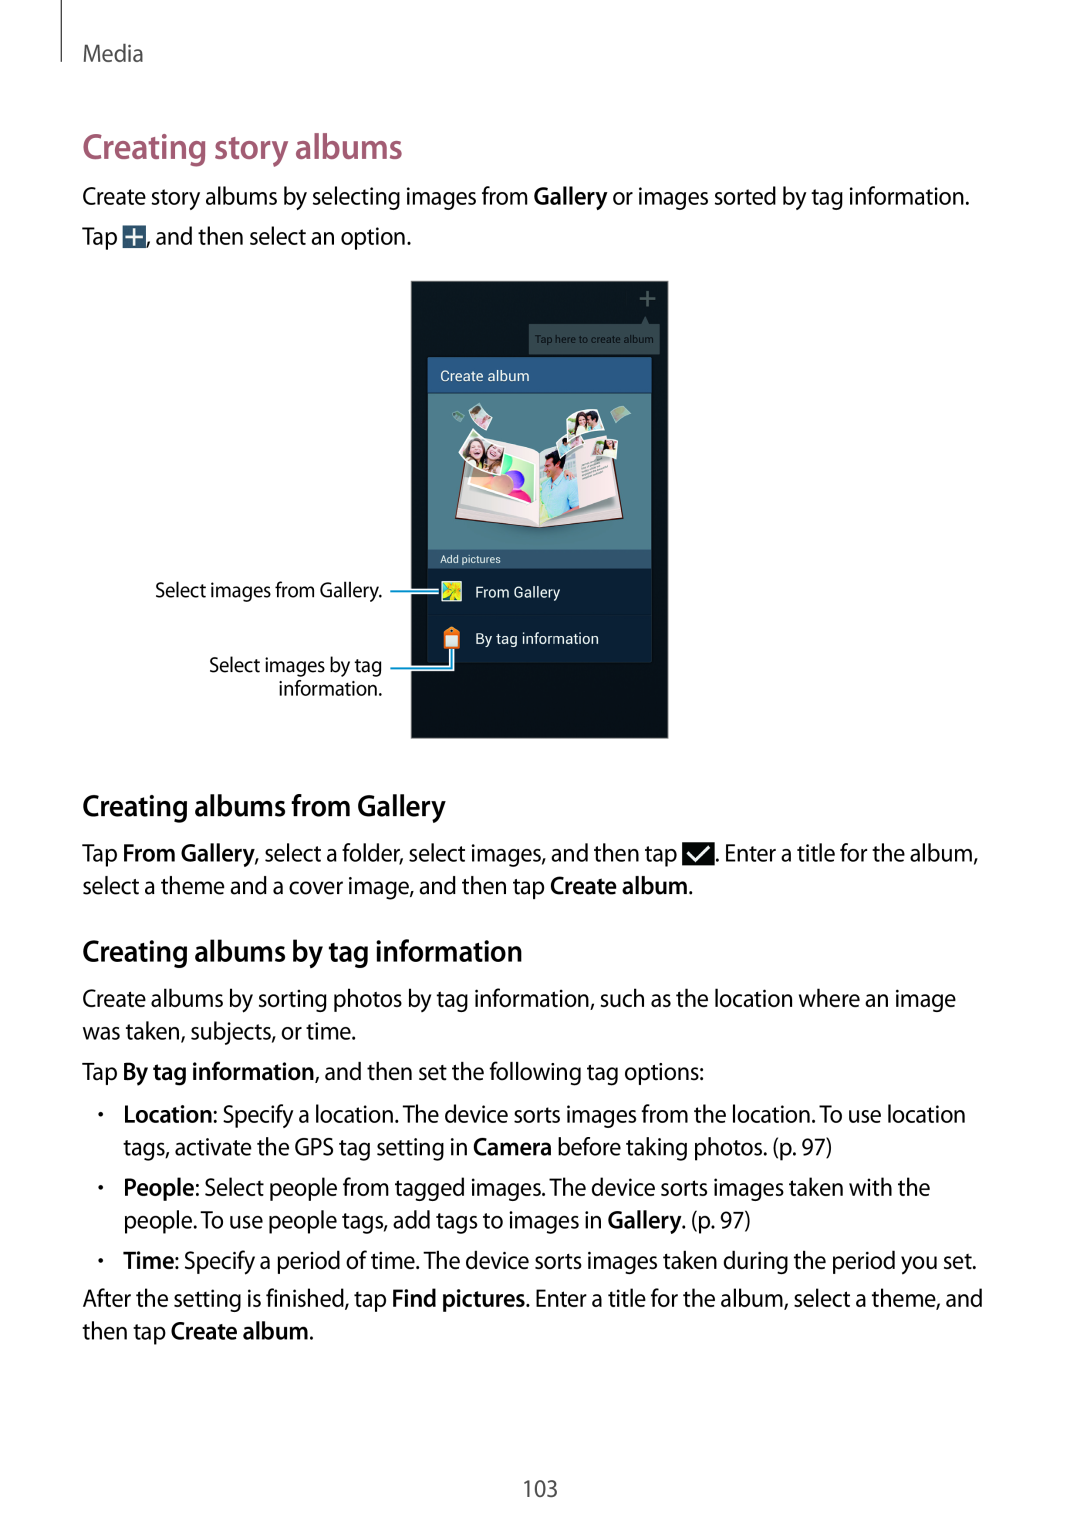 Samsung SM-N9005ZIEEGY Creating story albums, Creating albums from Gallery, Creating albums by tag information, Media 